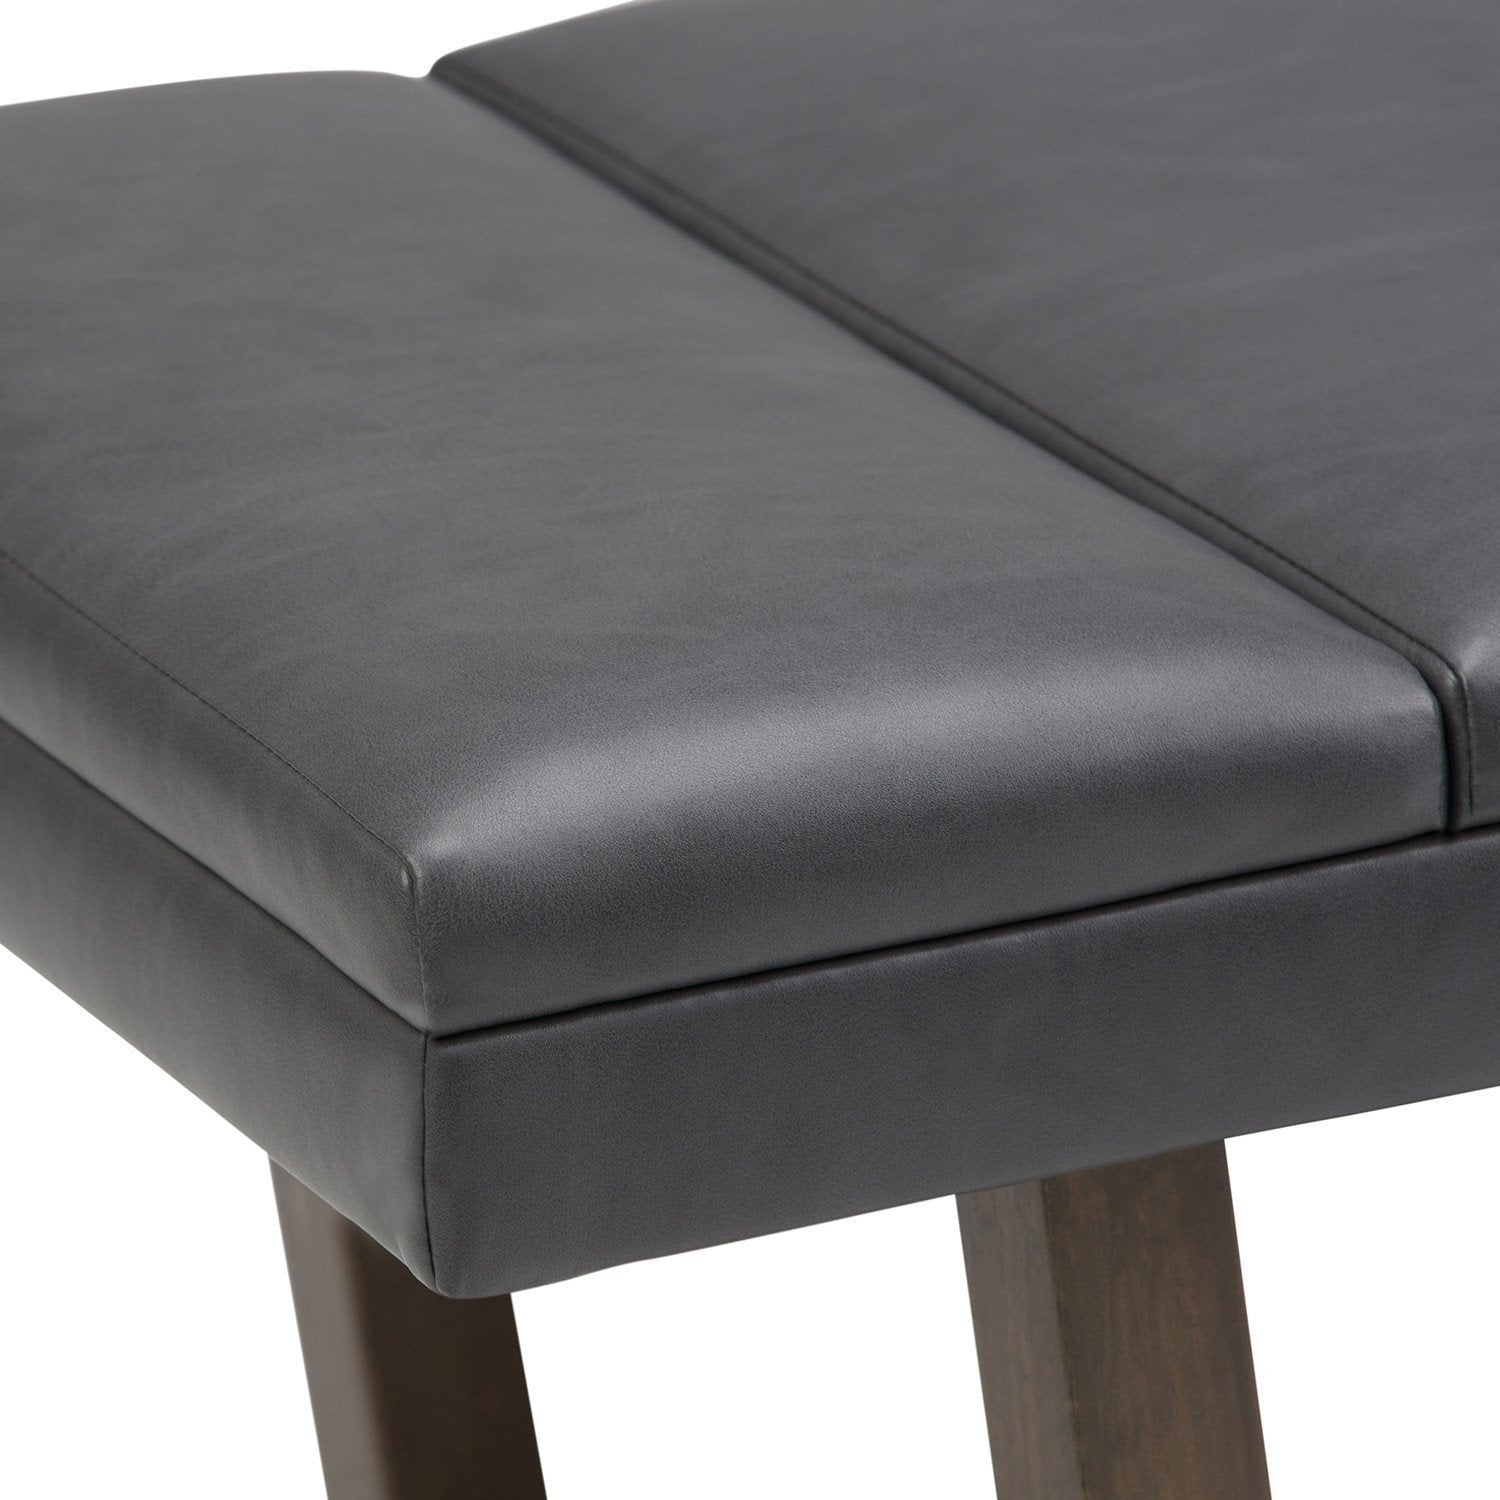 Stone Grey Vegan Leather | Jenson Ottoman Bench